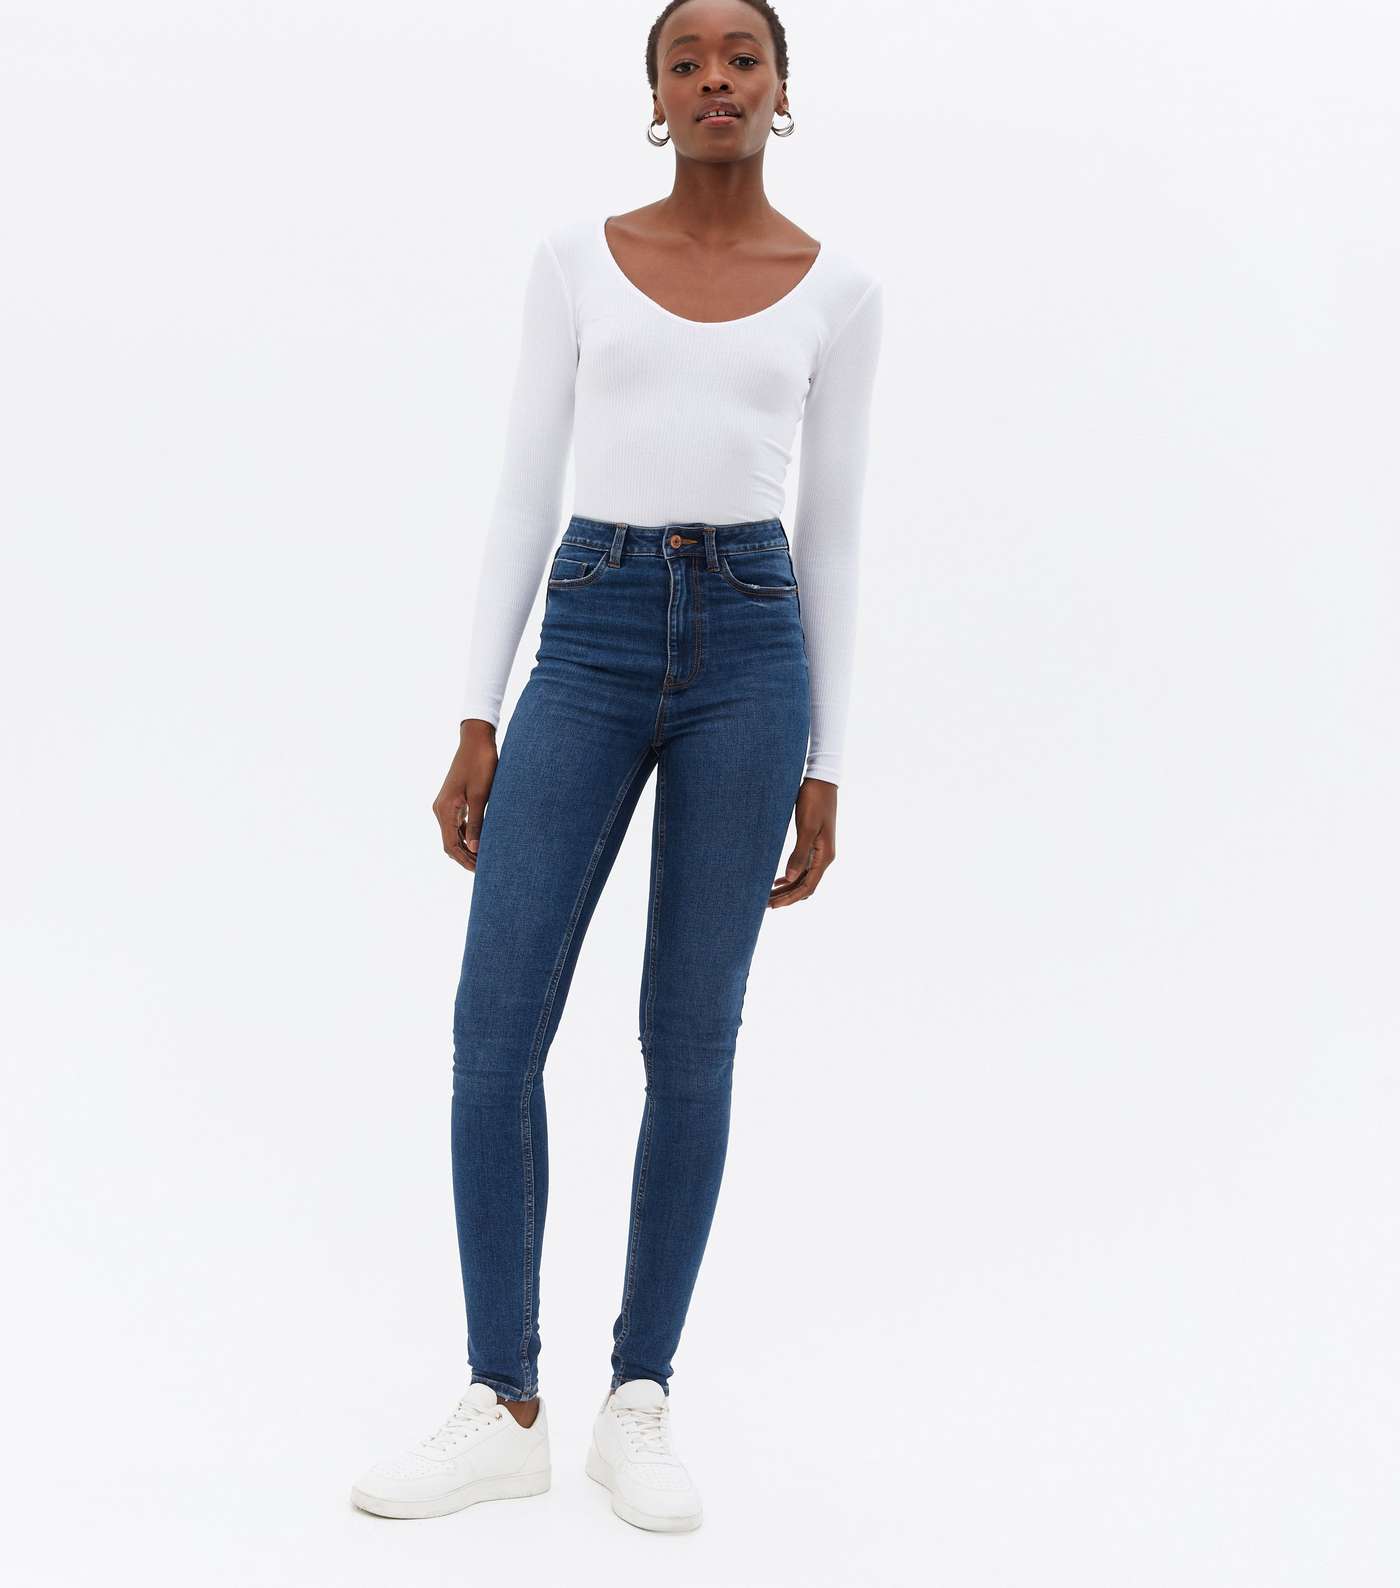 Tall Teal Lift & Shape Jenna Skinny Jeans